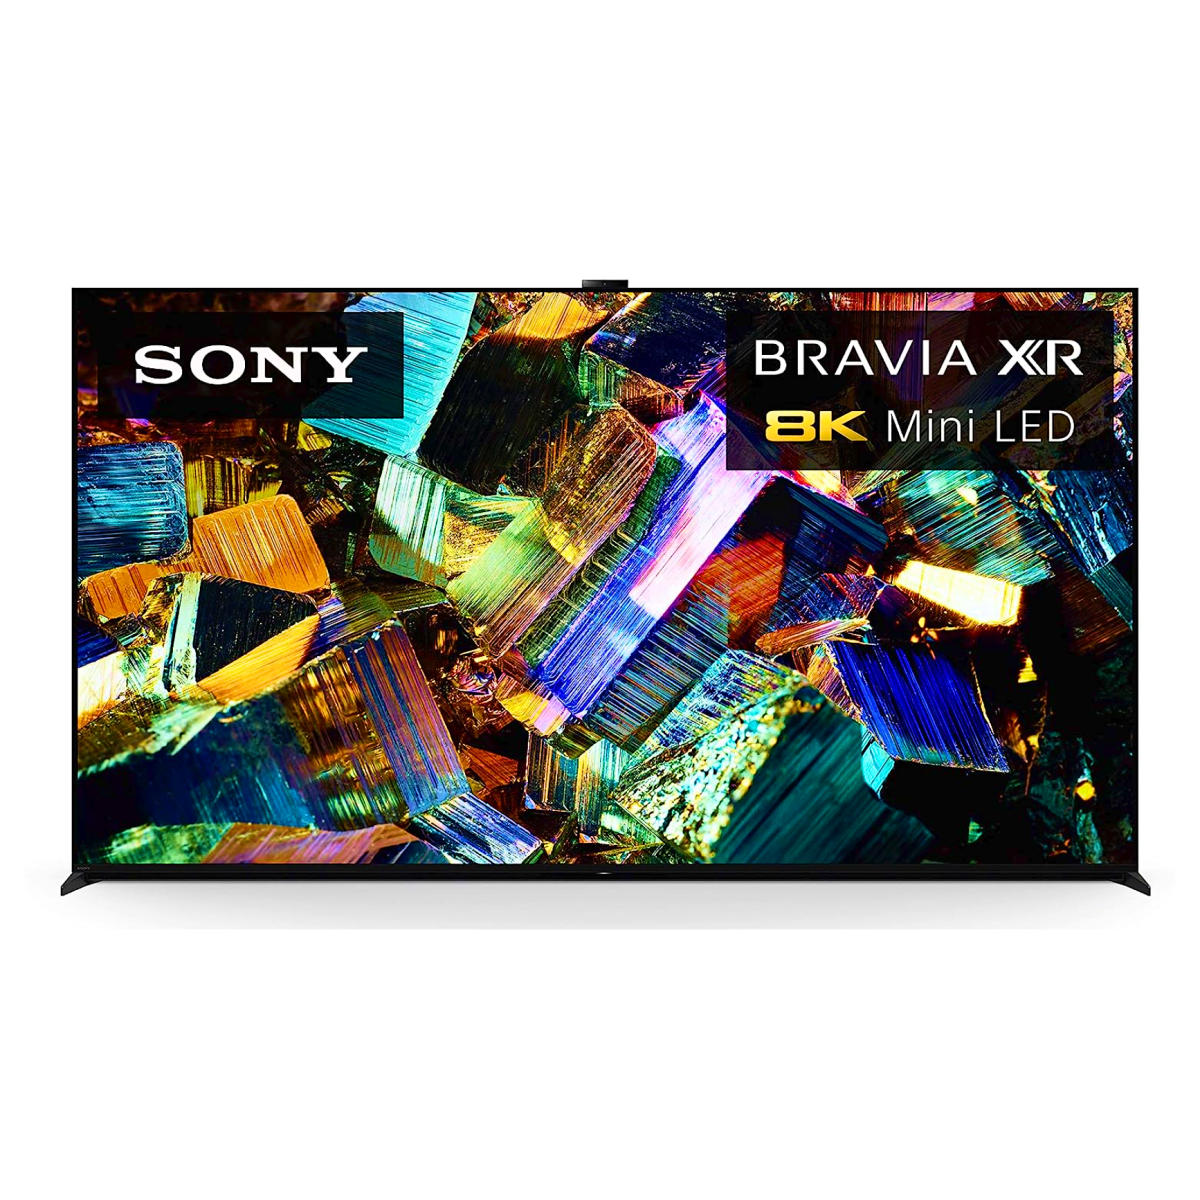 A Sony Bravia XR Z9K Mini LED TV